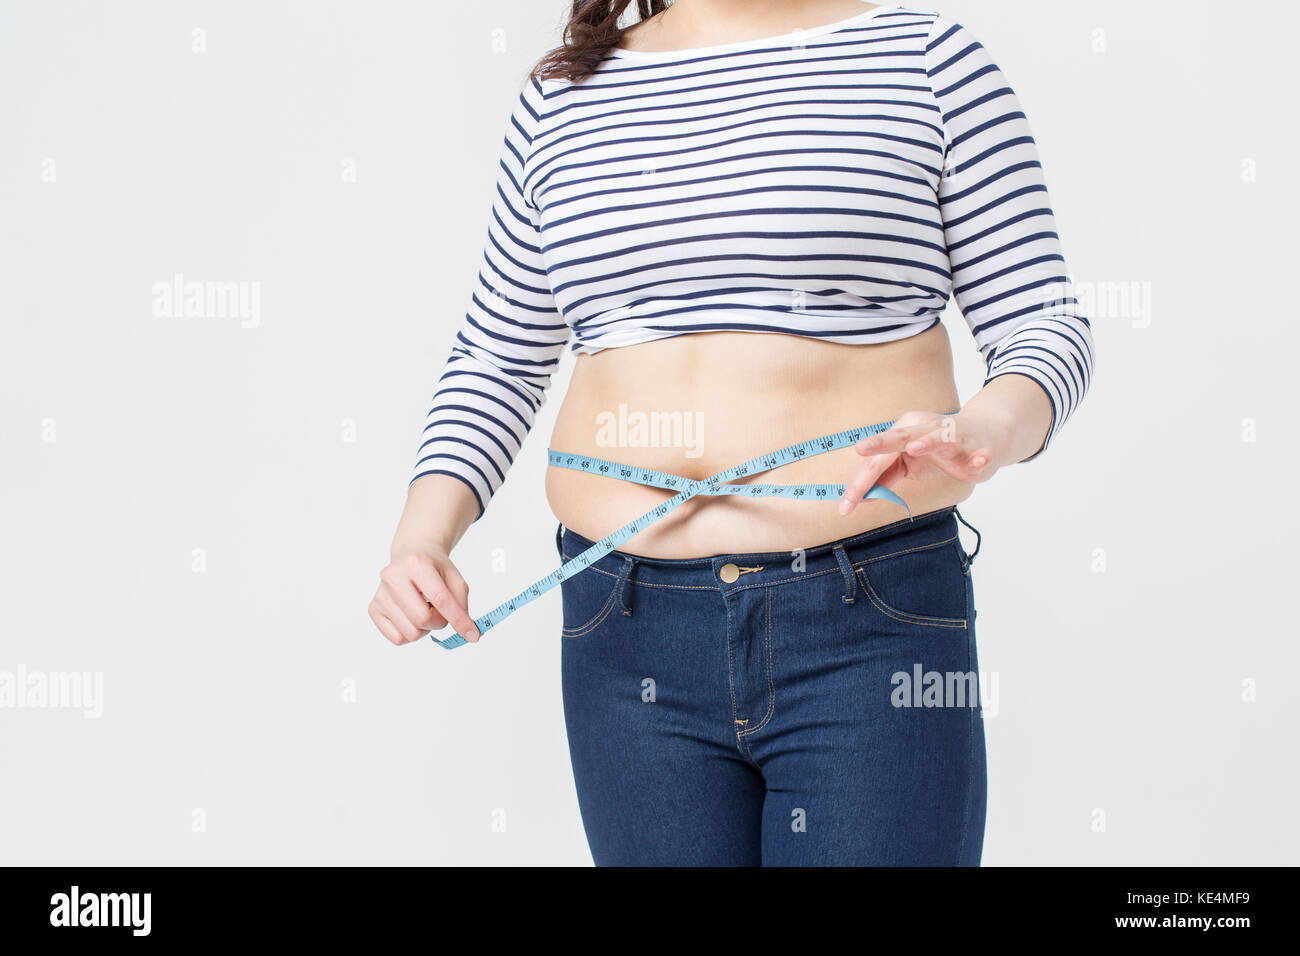 Woman Excess Weight Make Waist Tape Measure Warm Tones Studio Stock Photo  by ©kazzakova 599135156